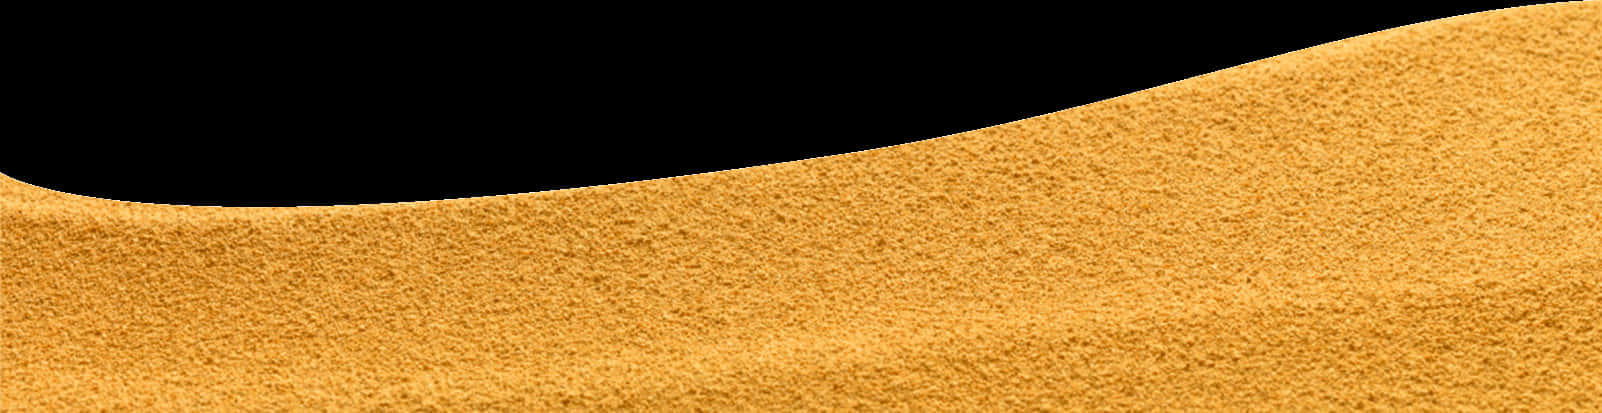 Golden Sand Wave Texture PNG